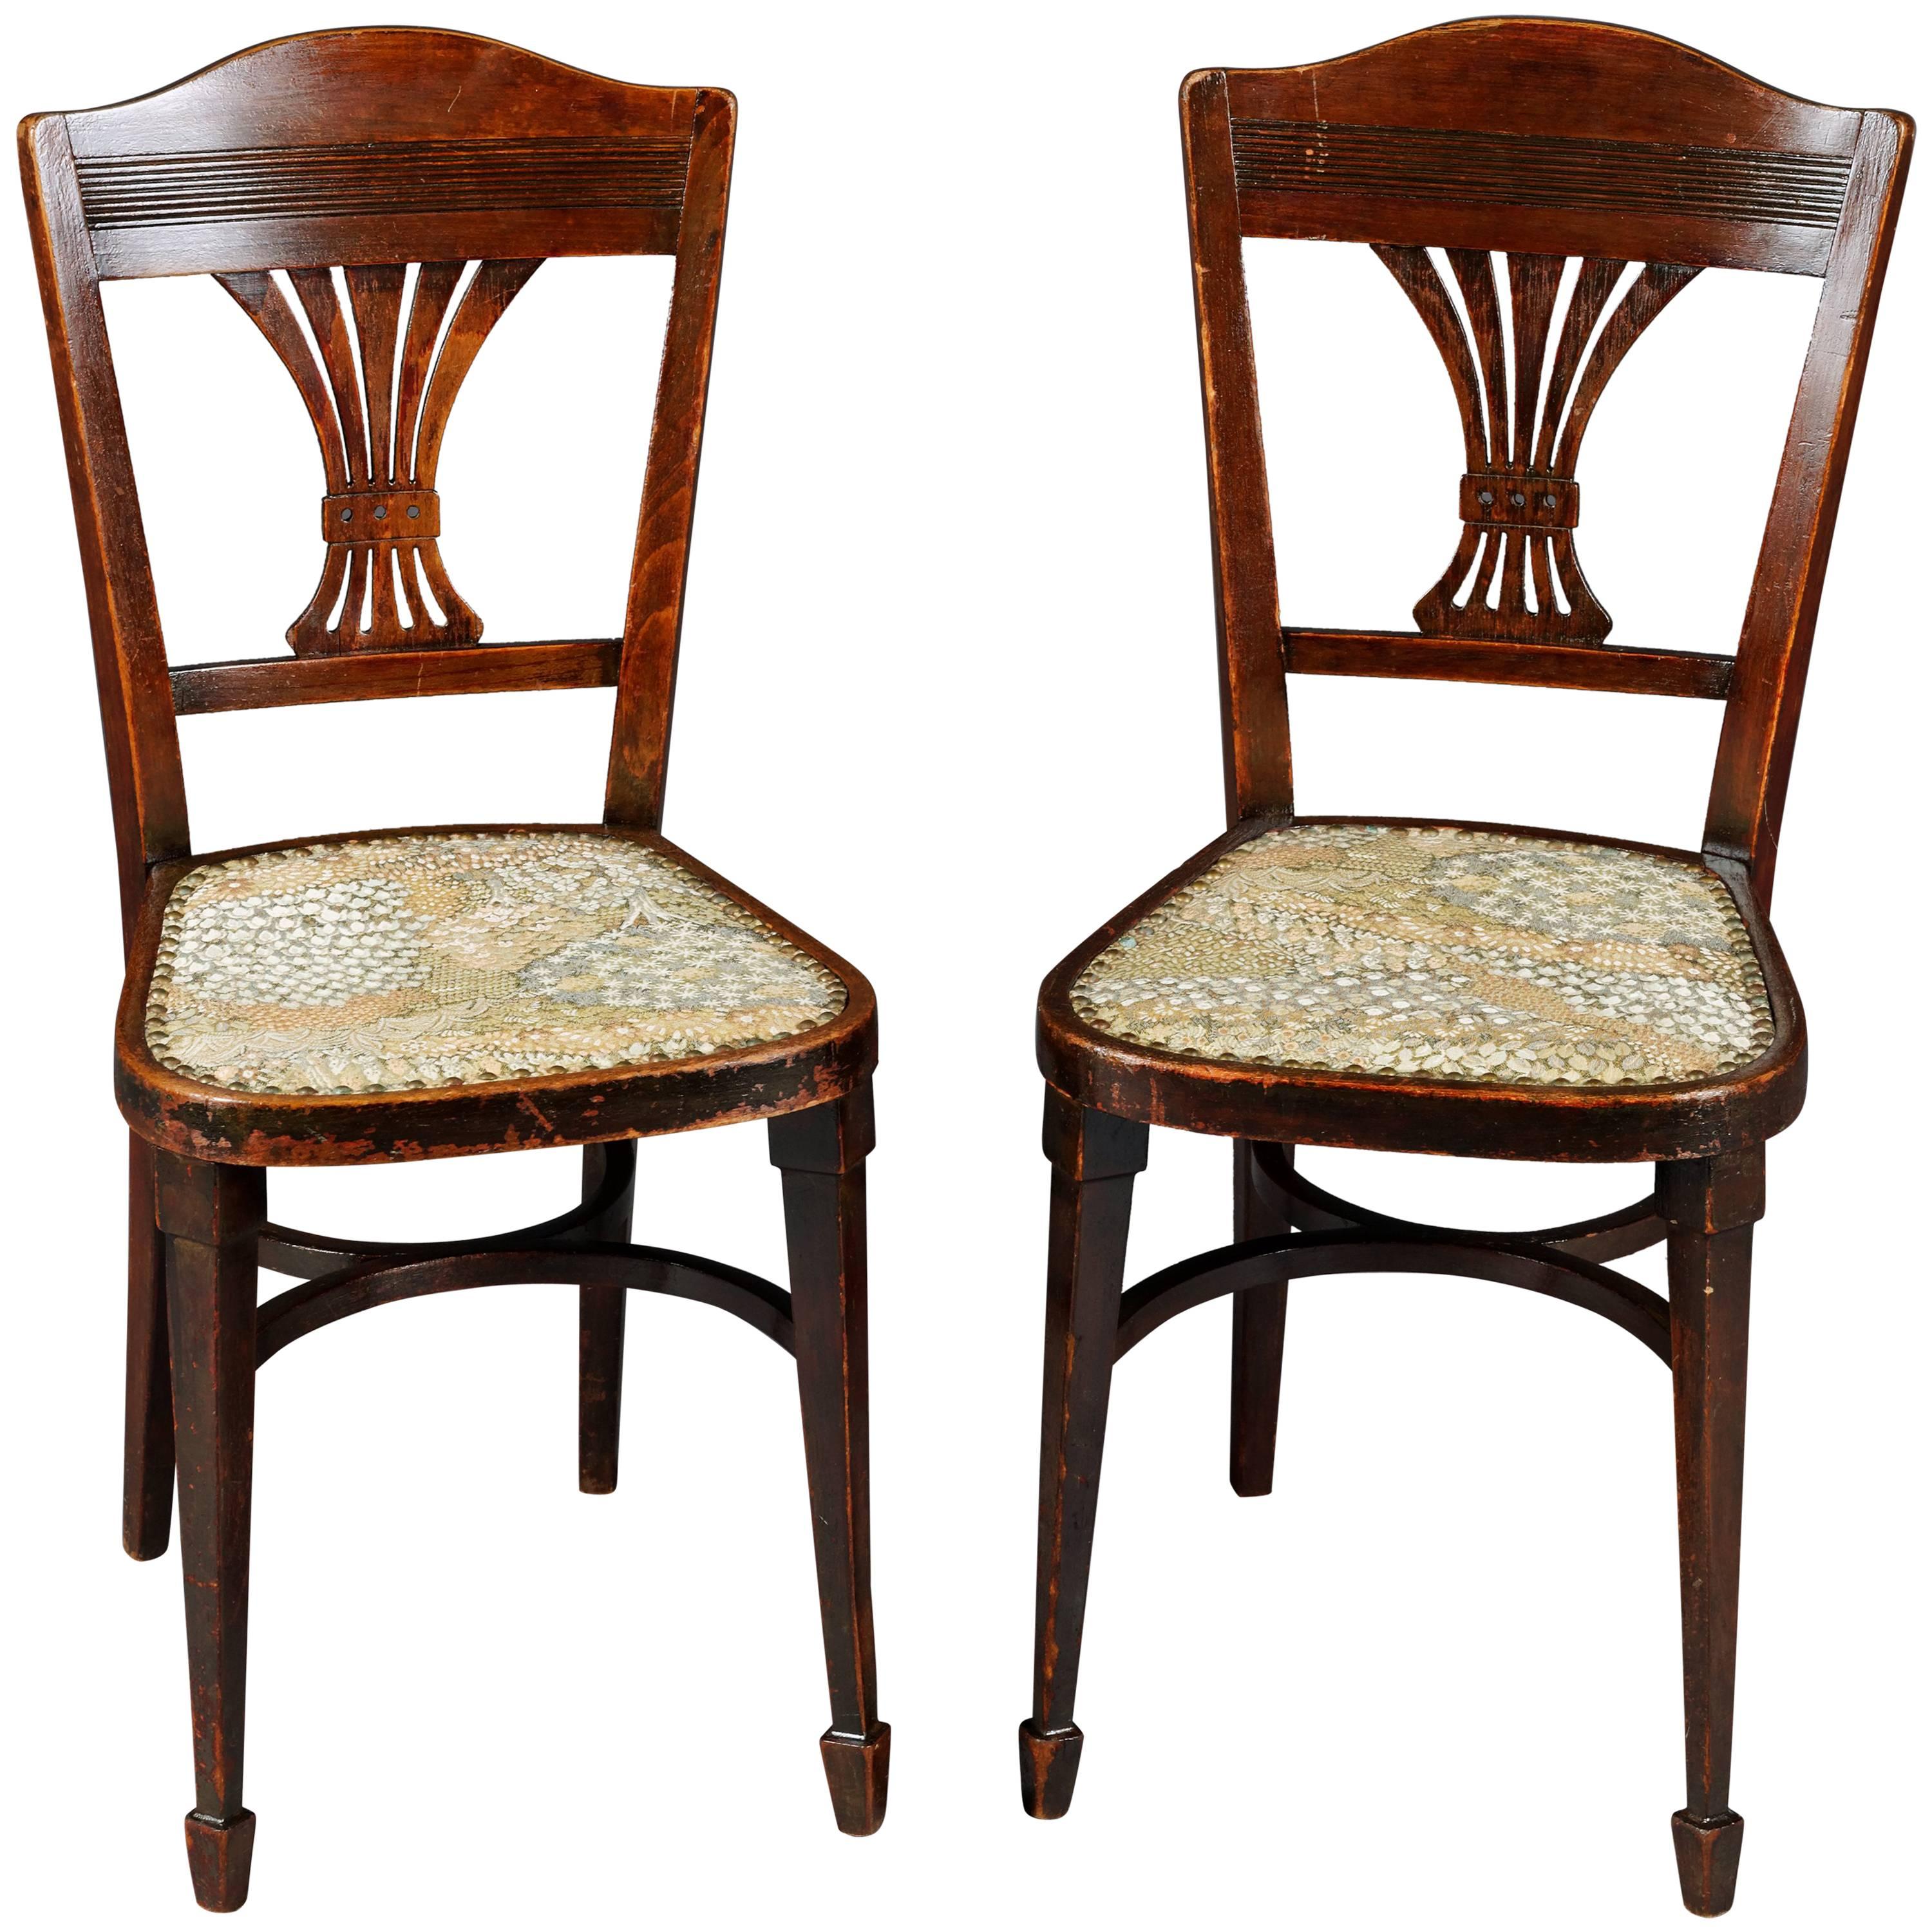 19th Century Pair of Art Nouveau Chairs